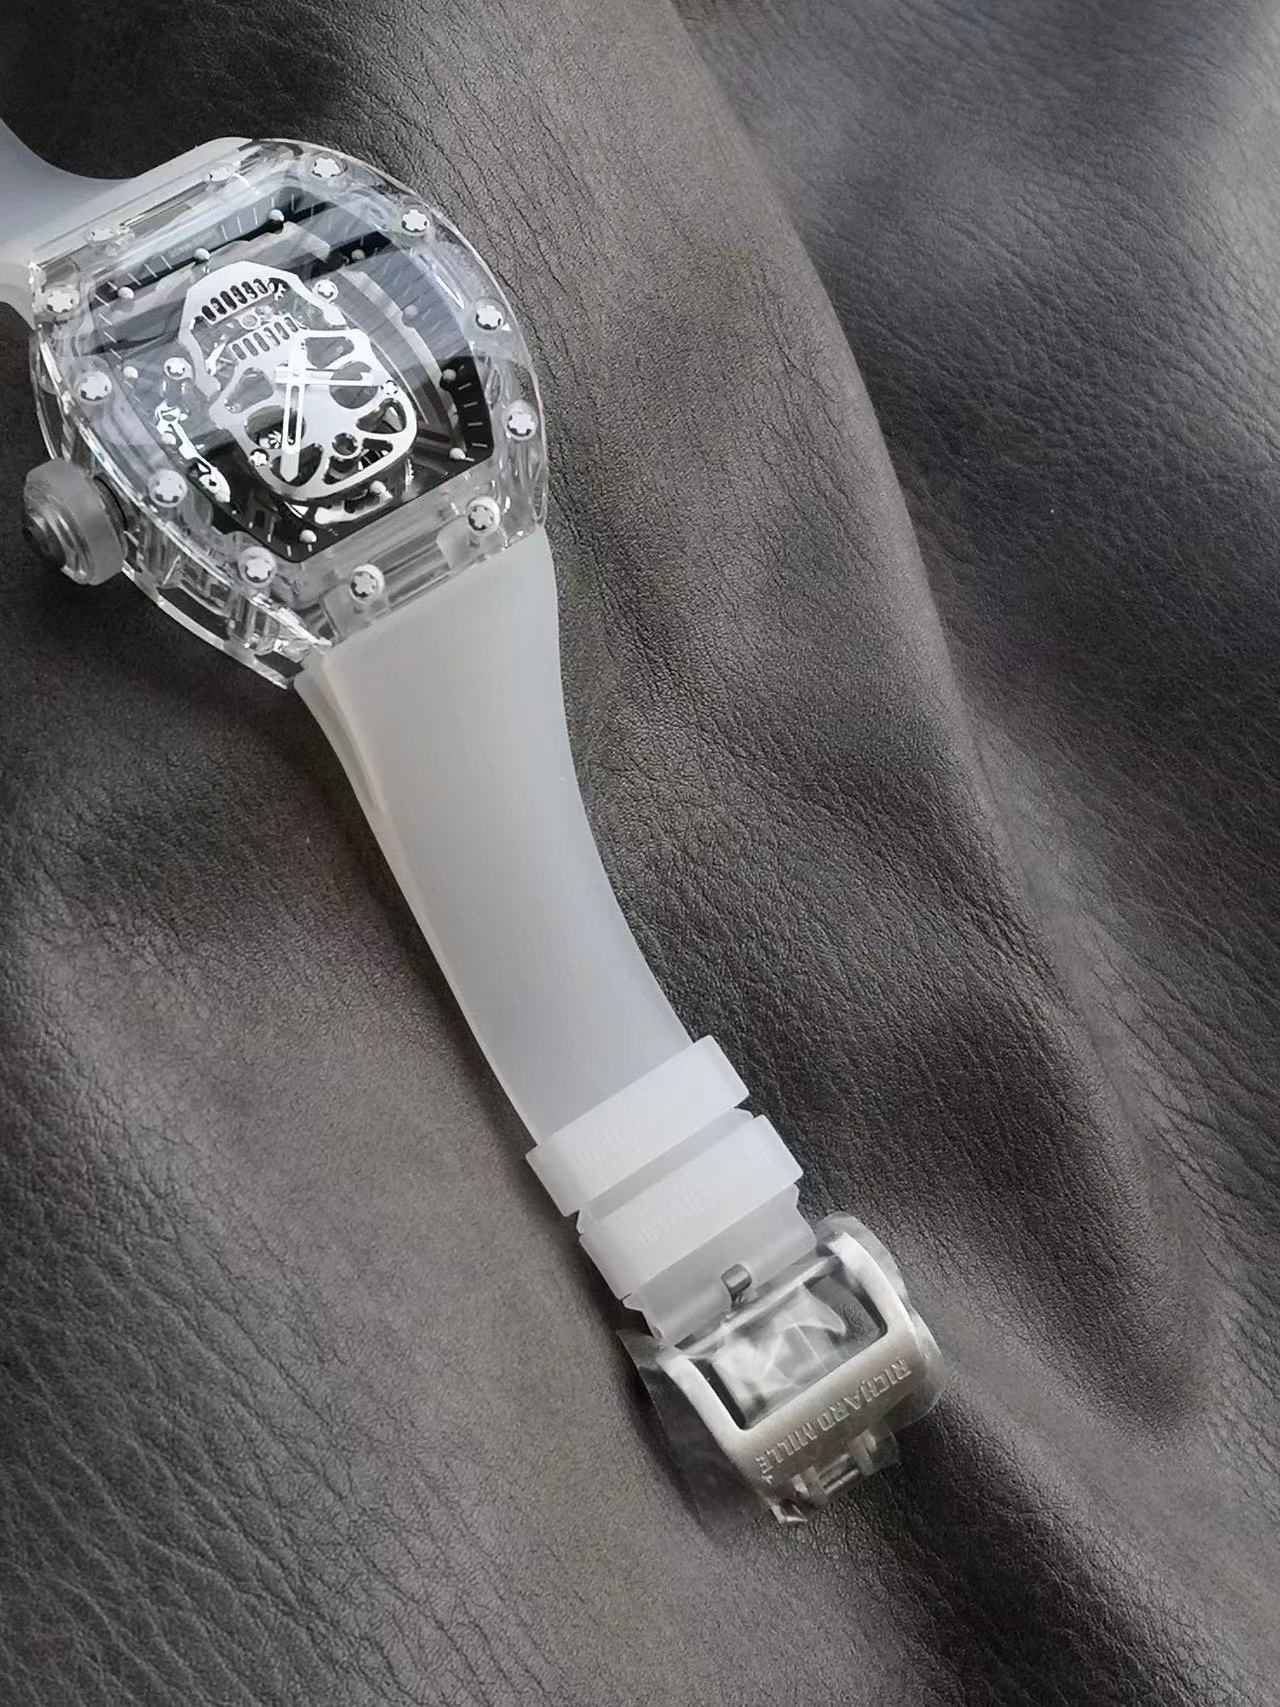 2024 MS Factory Watchrm27-03 Spanish Bull Sapphire Crystal True Tourbillon Movement Full Transparent Case Designer Watches